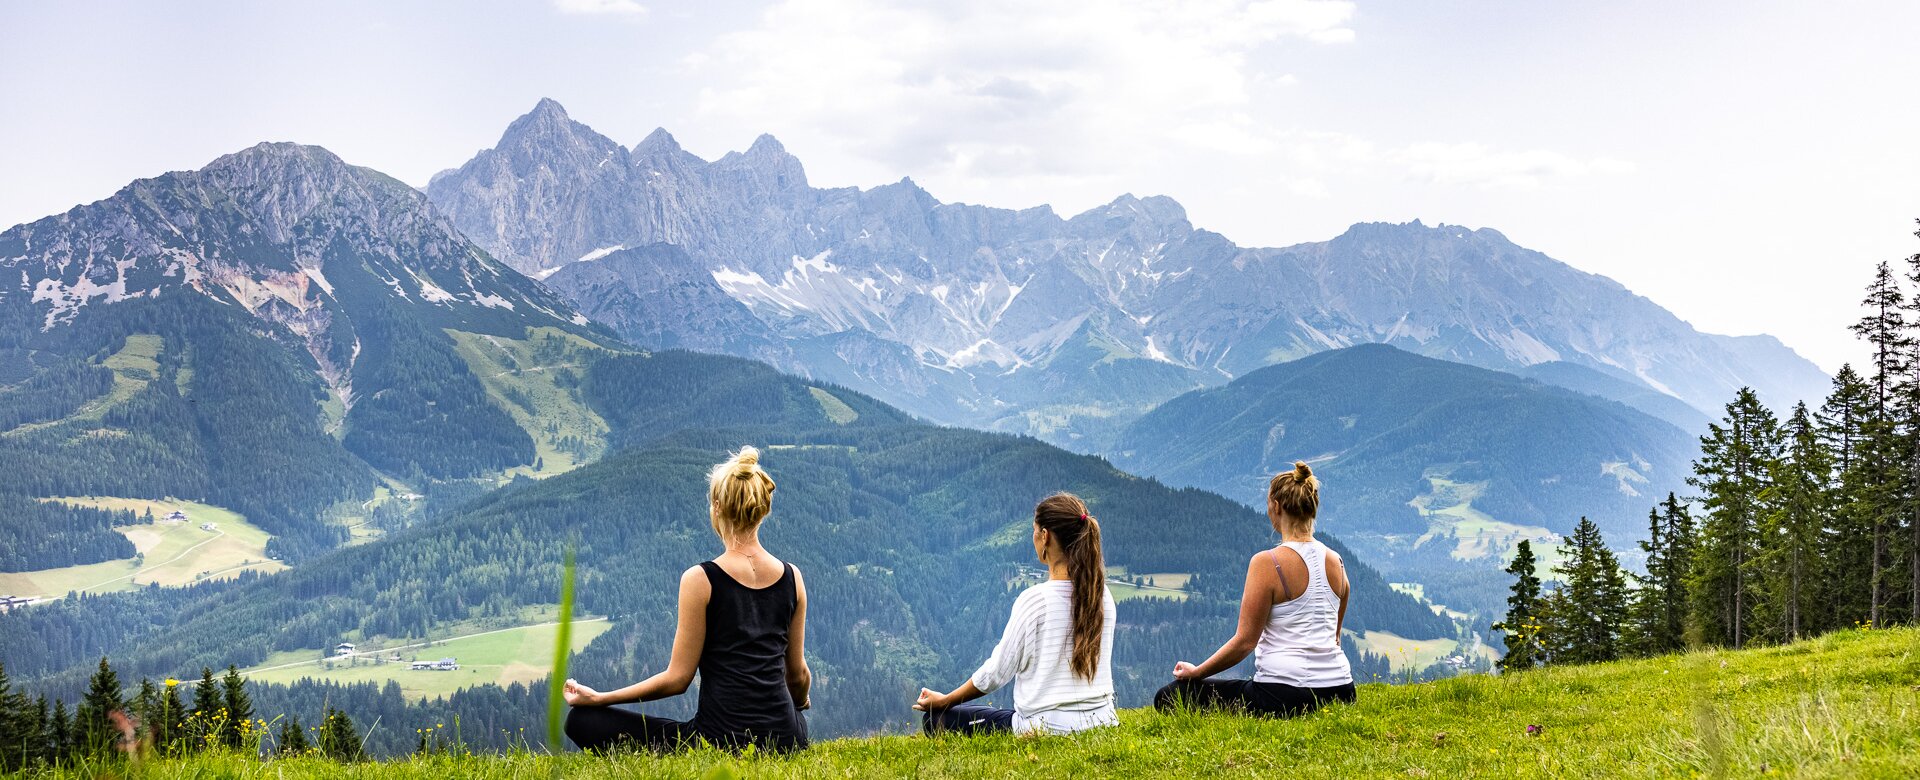 Yoga am Berg | © Bergbahnen Filzmoos/Fischbacher 